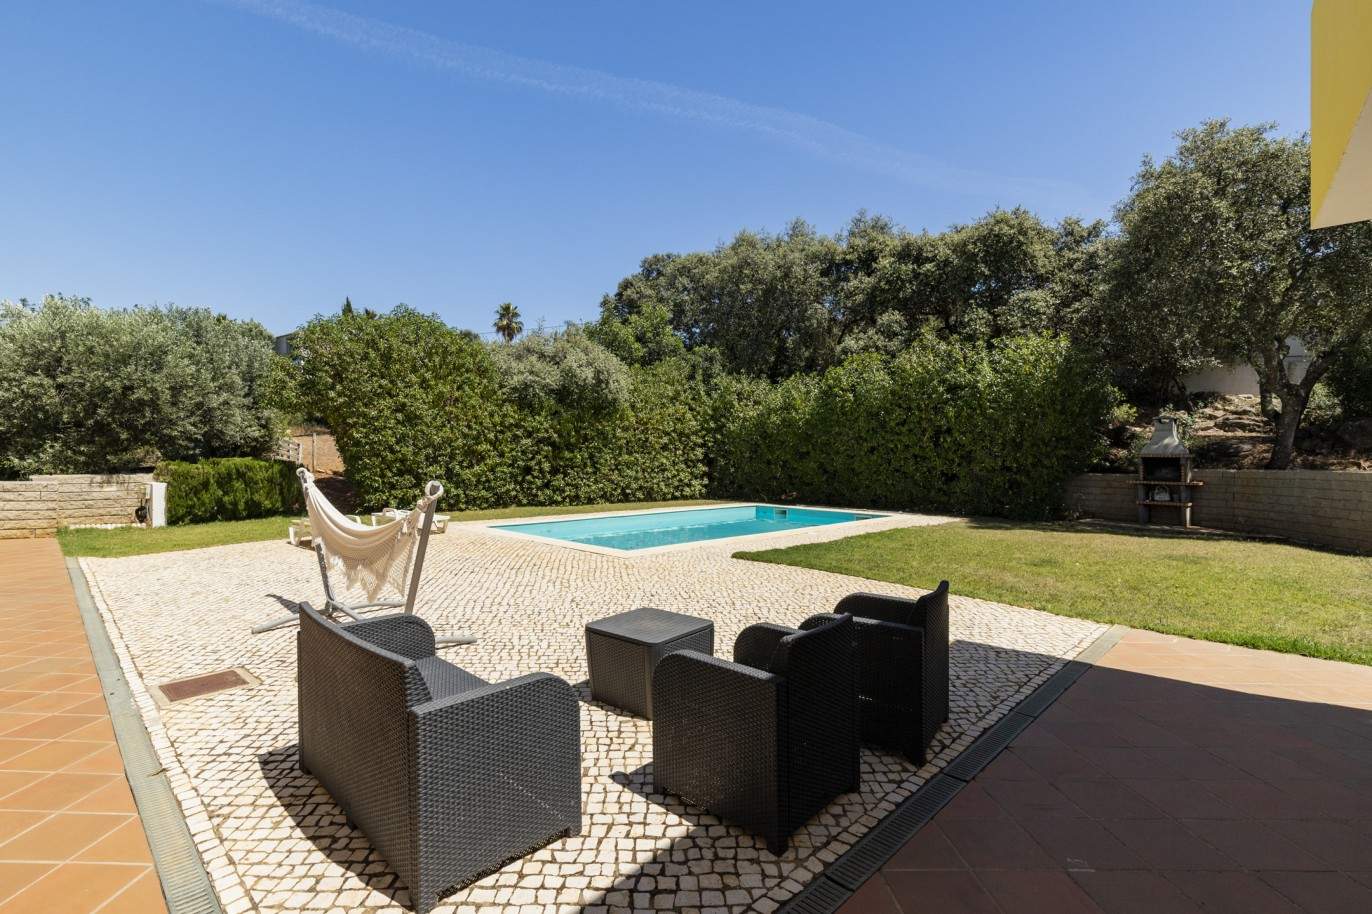 4 Bedroom Villa with pool, for sale in Loulé, Algarve_201301